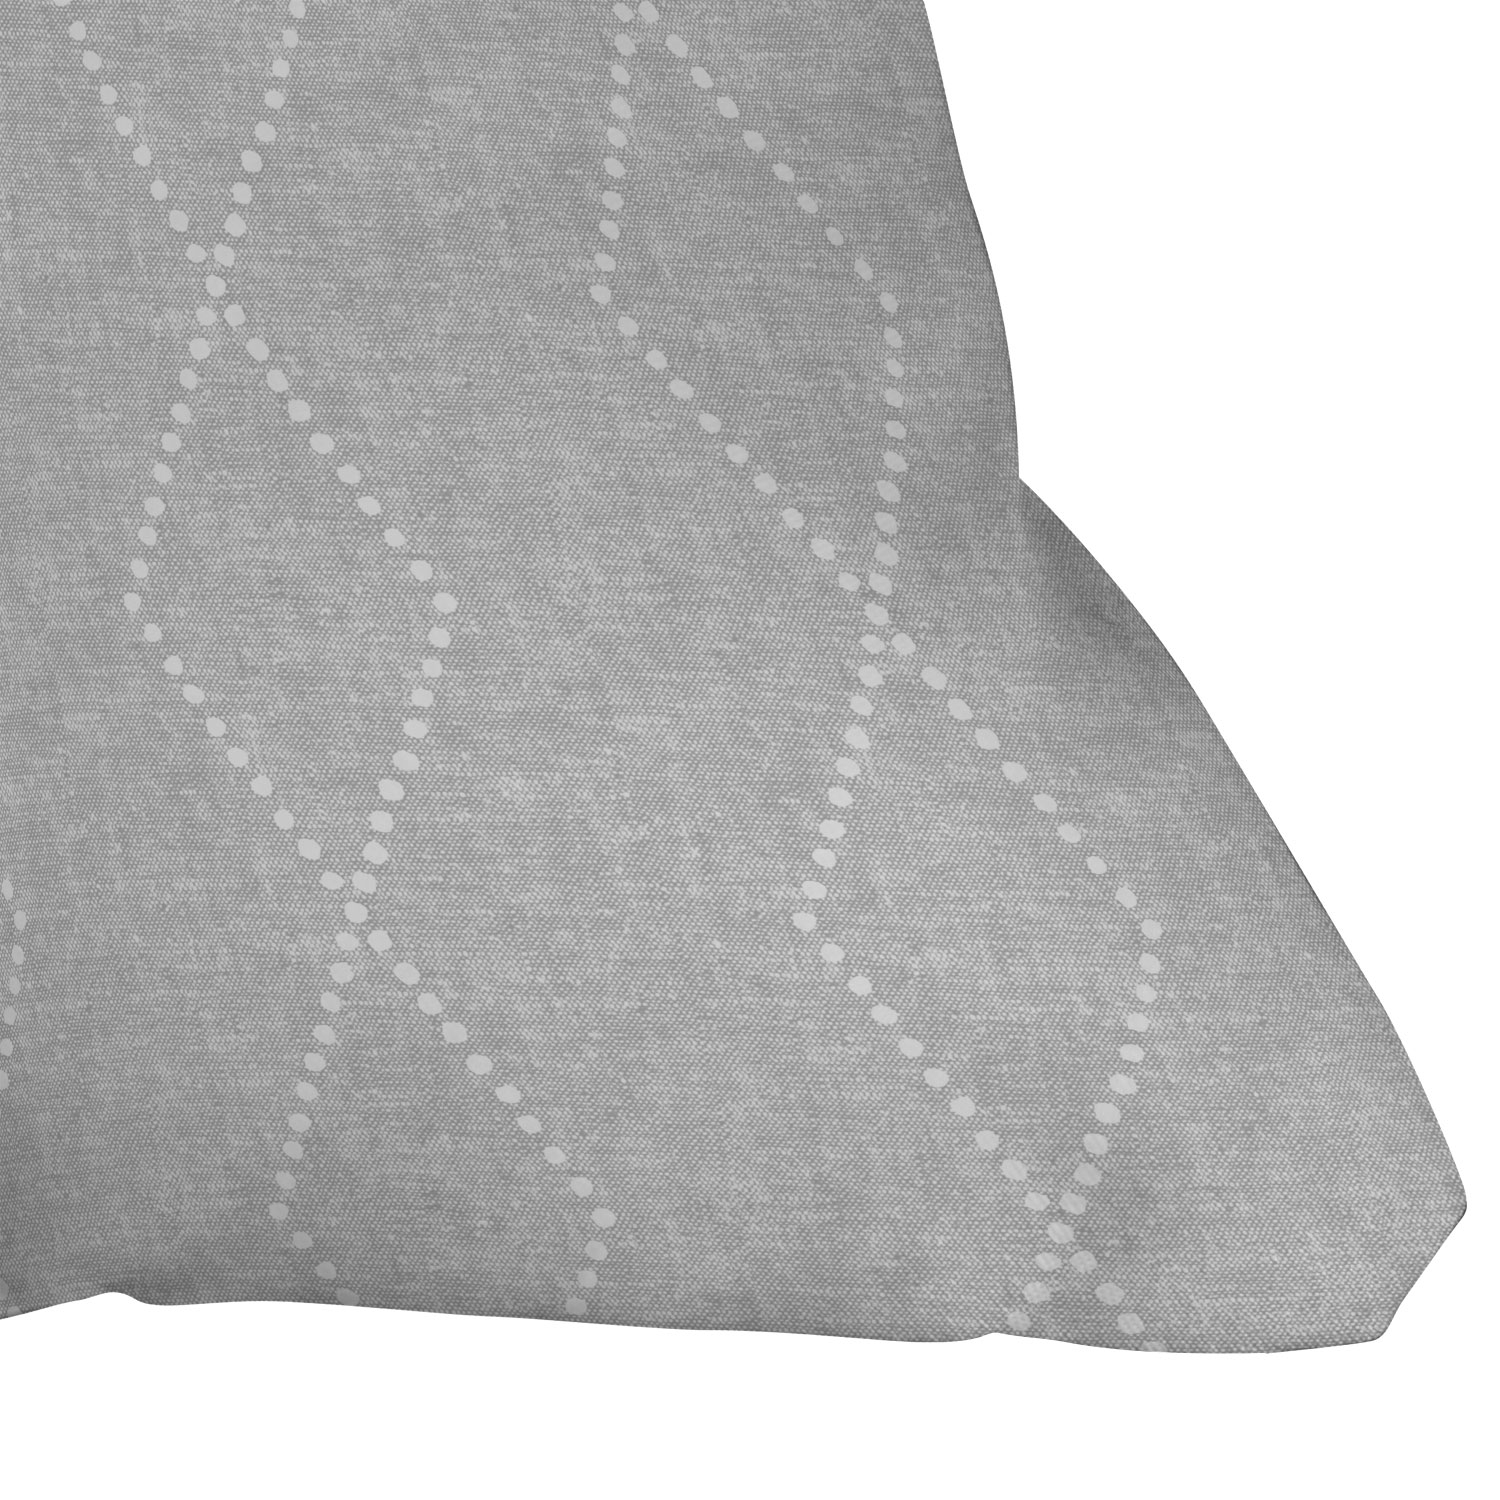 Geo Boho Diamonds Gray by Little Arrow Design Co - Outdoor Throw Pillow 16" x 16" - Image 2